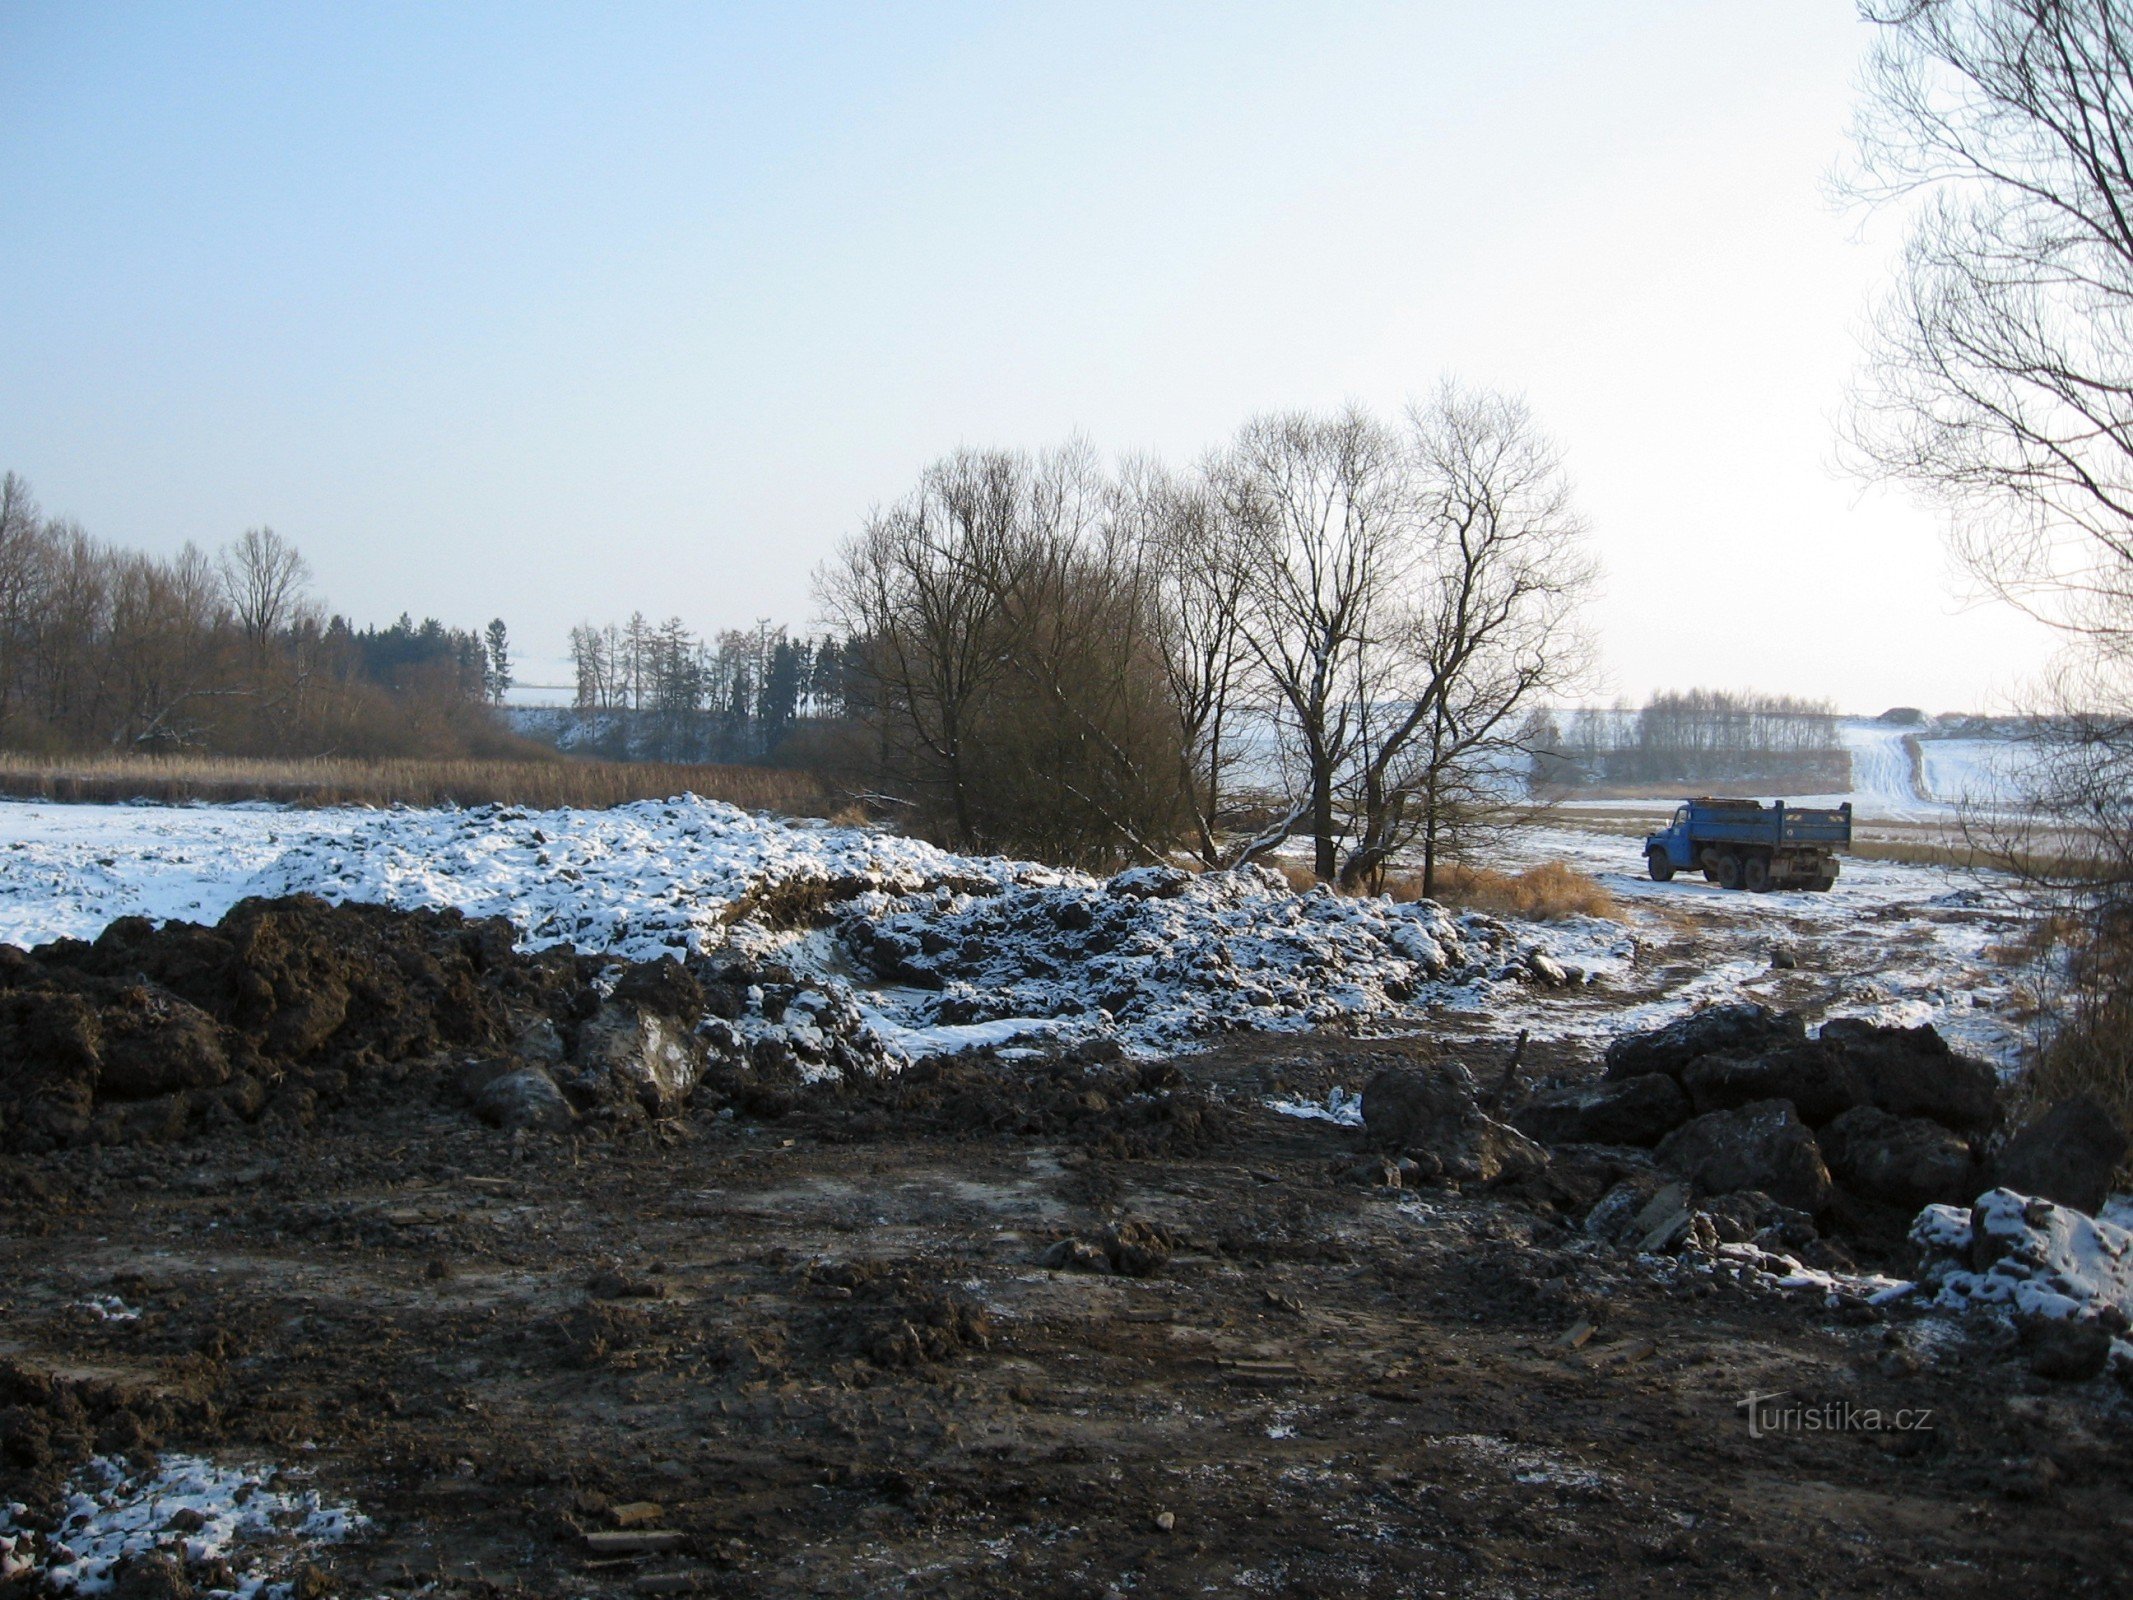 Revitalisierung von Dolejší rybník - Februar 2012